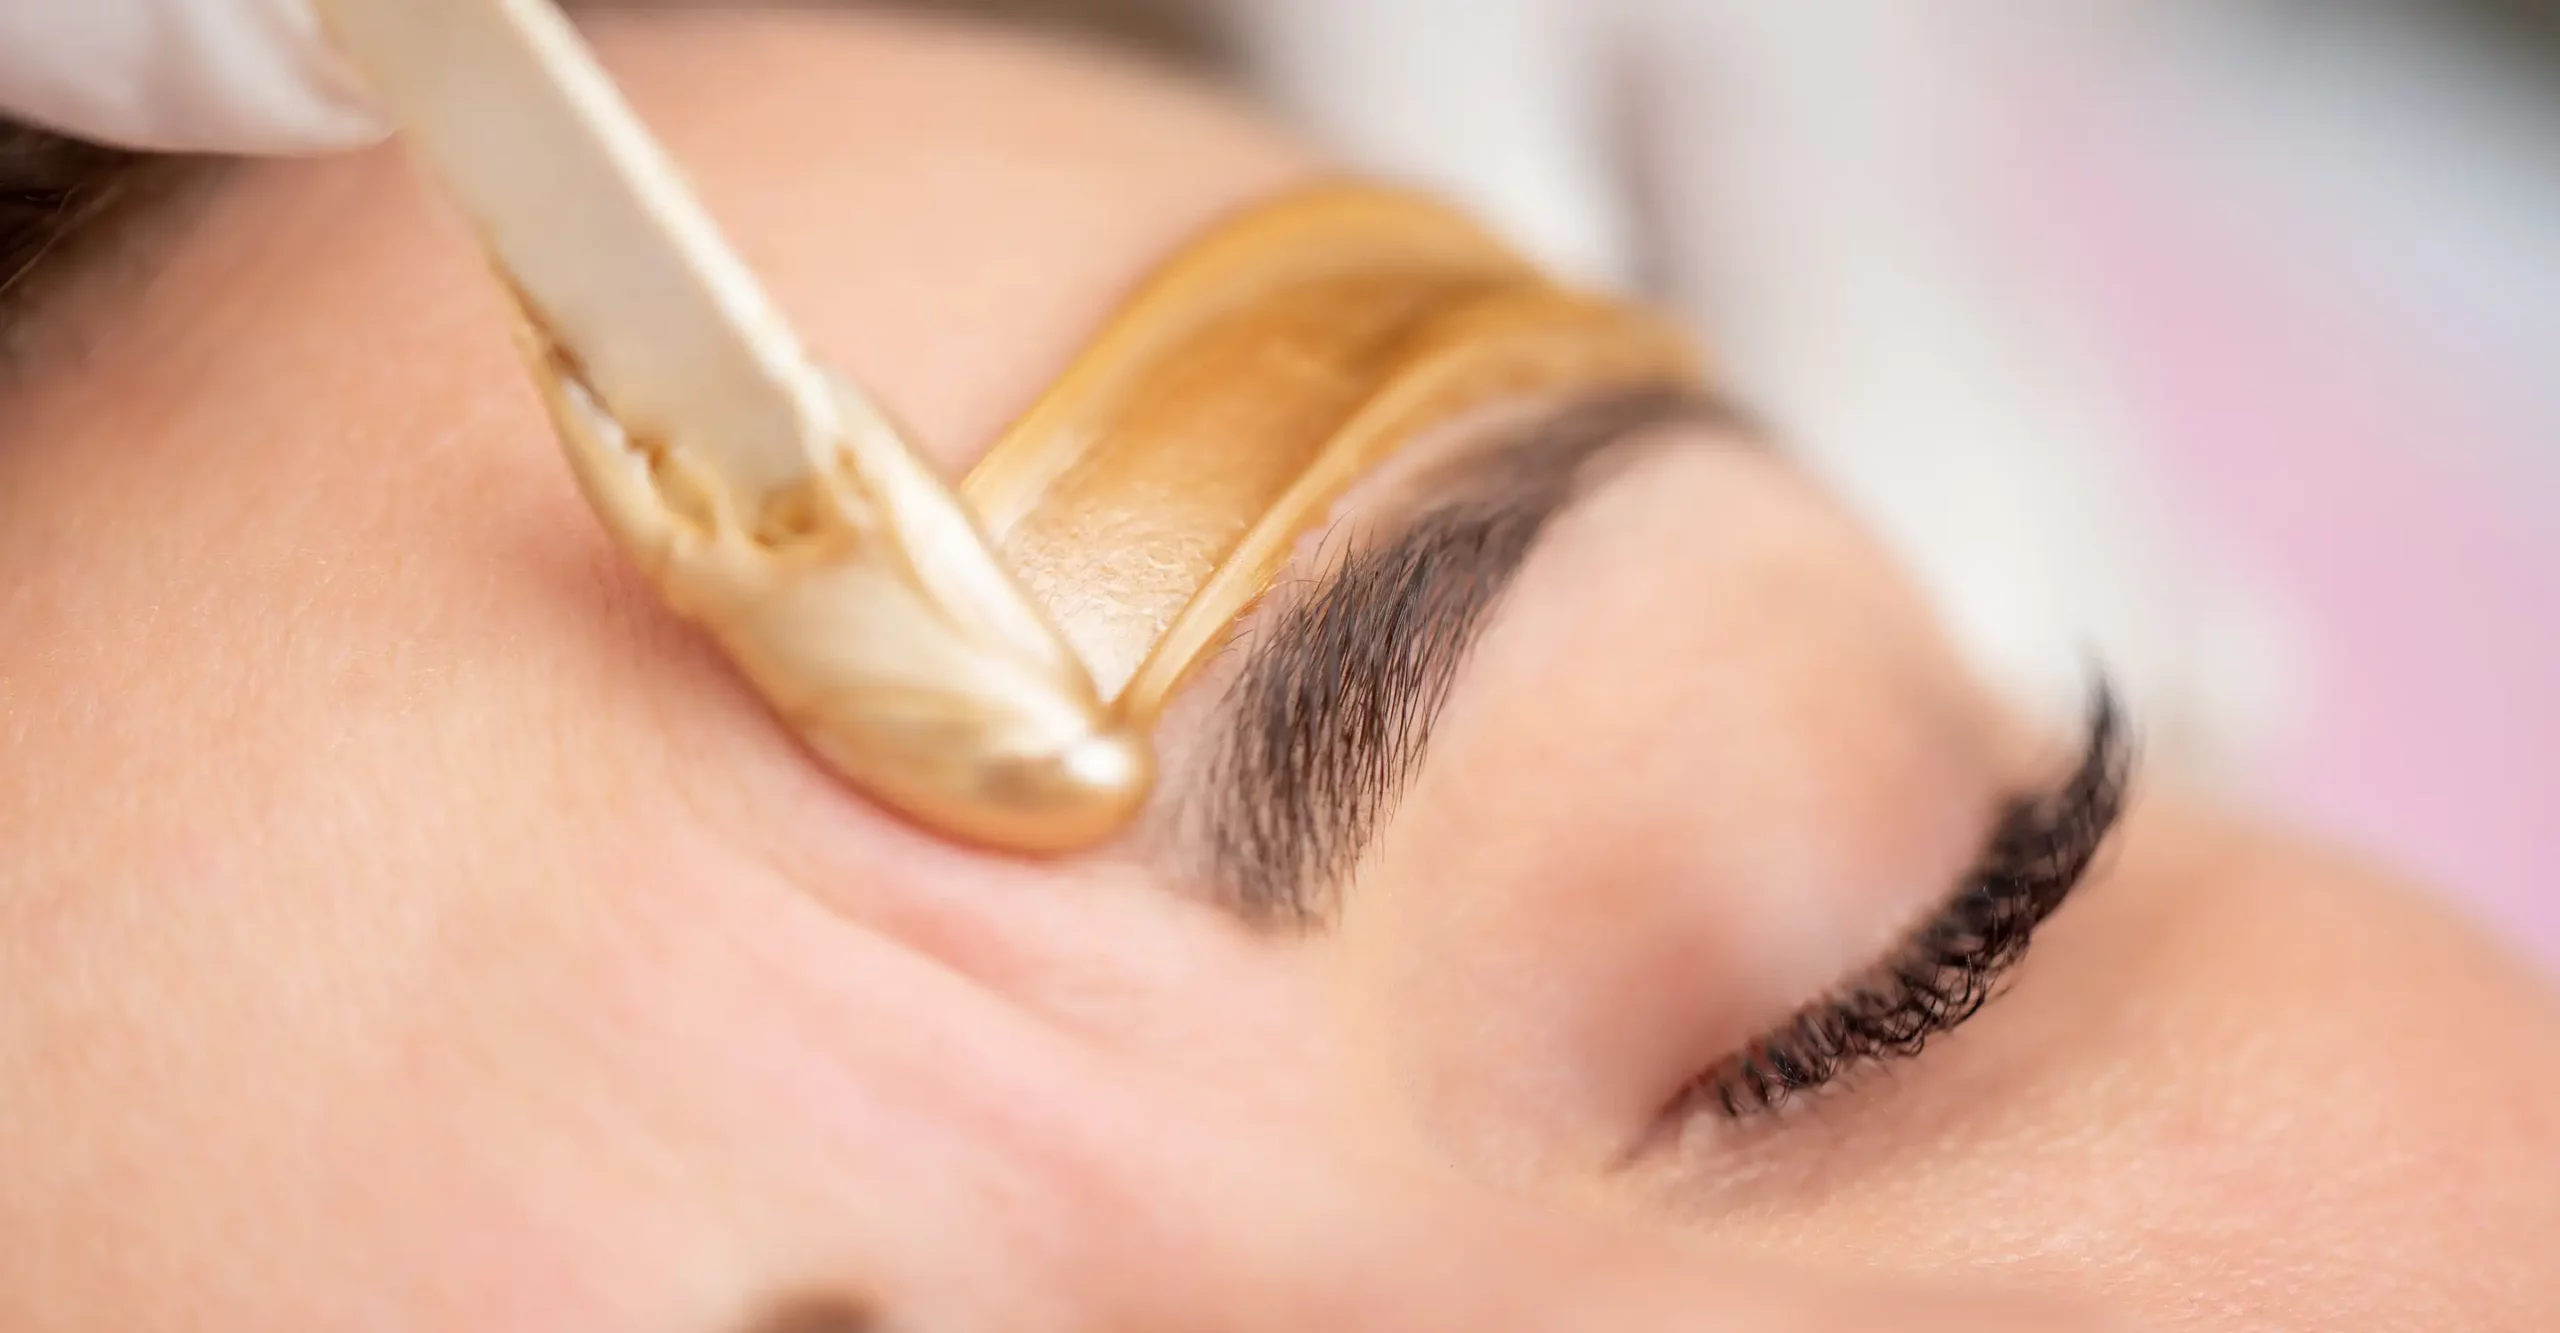 Esthetician applies wax to help shape client’s eyebrows.